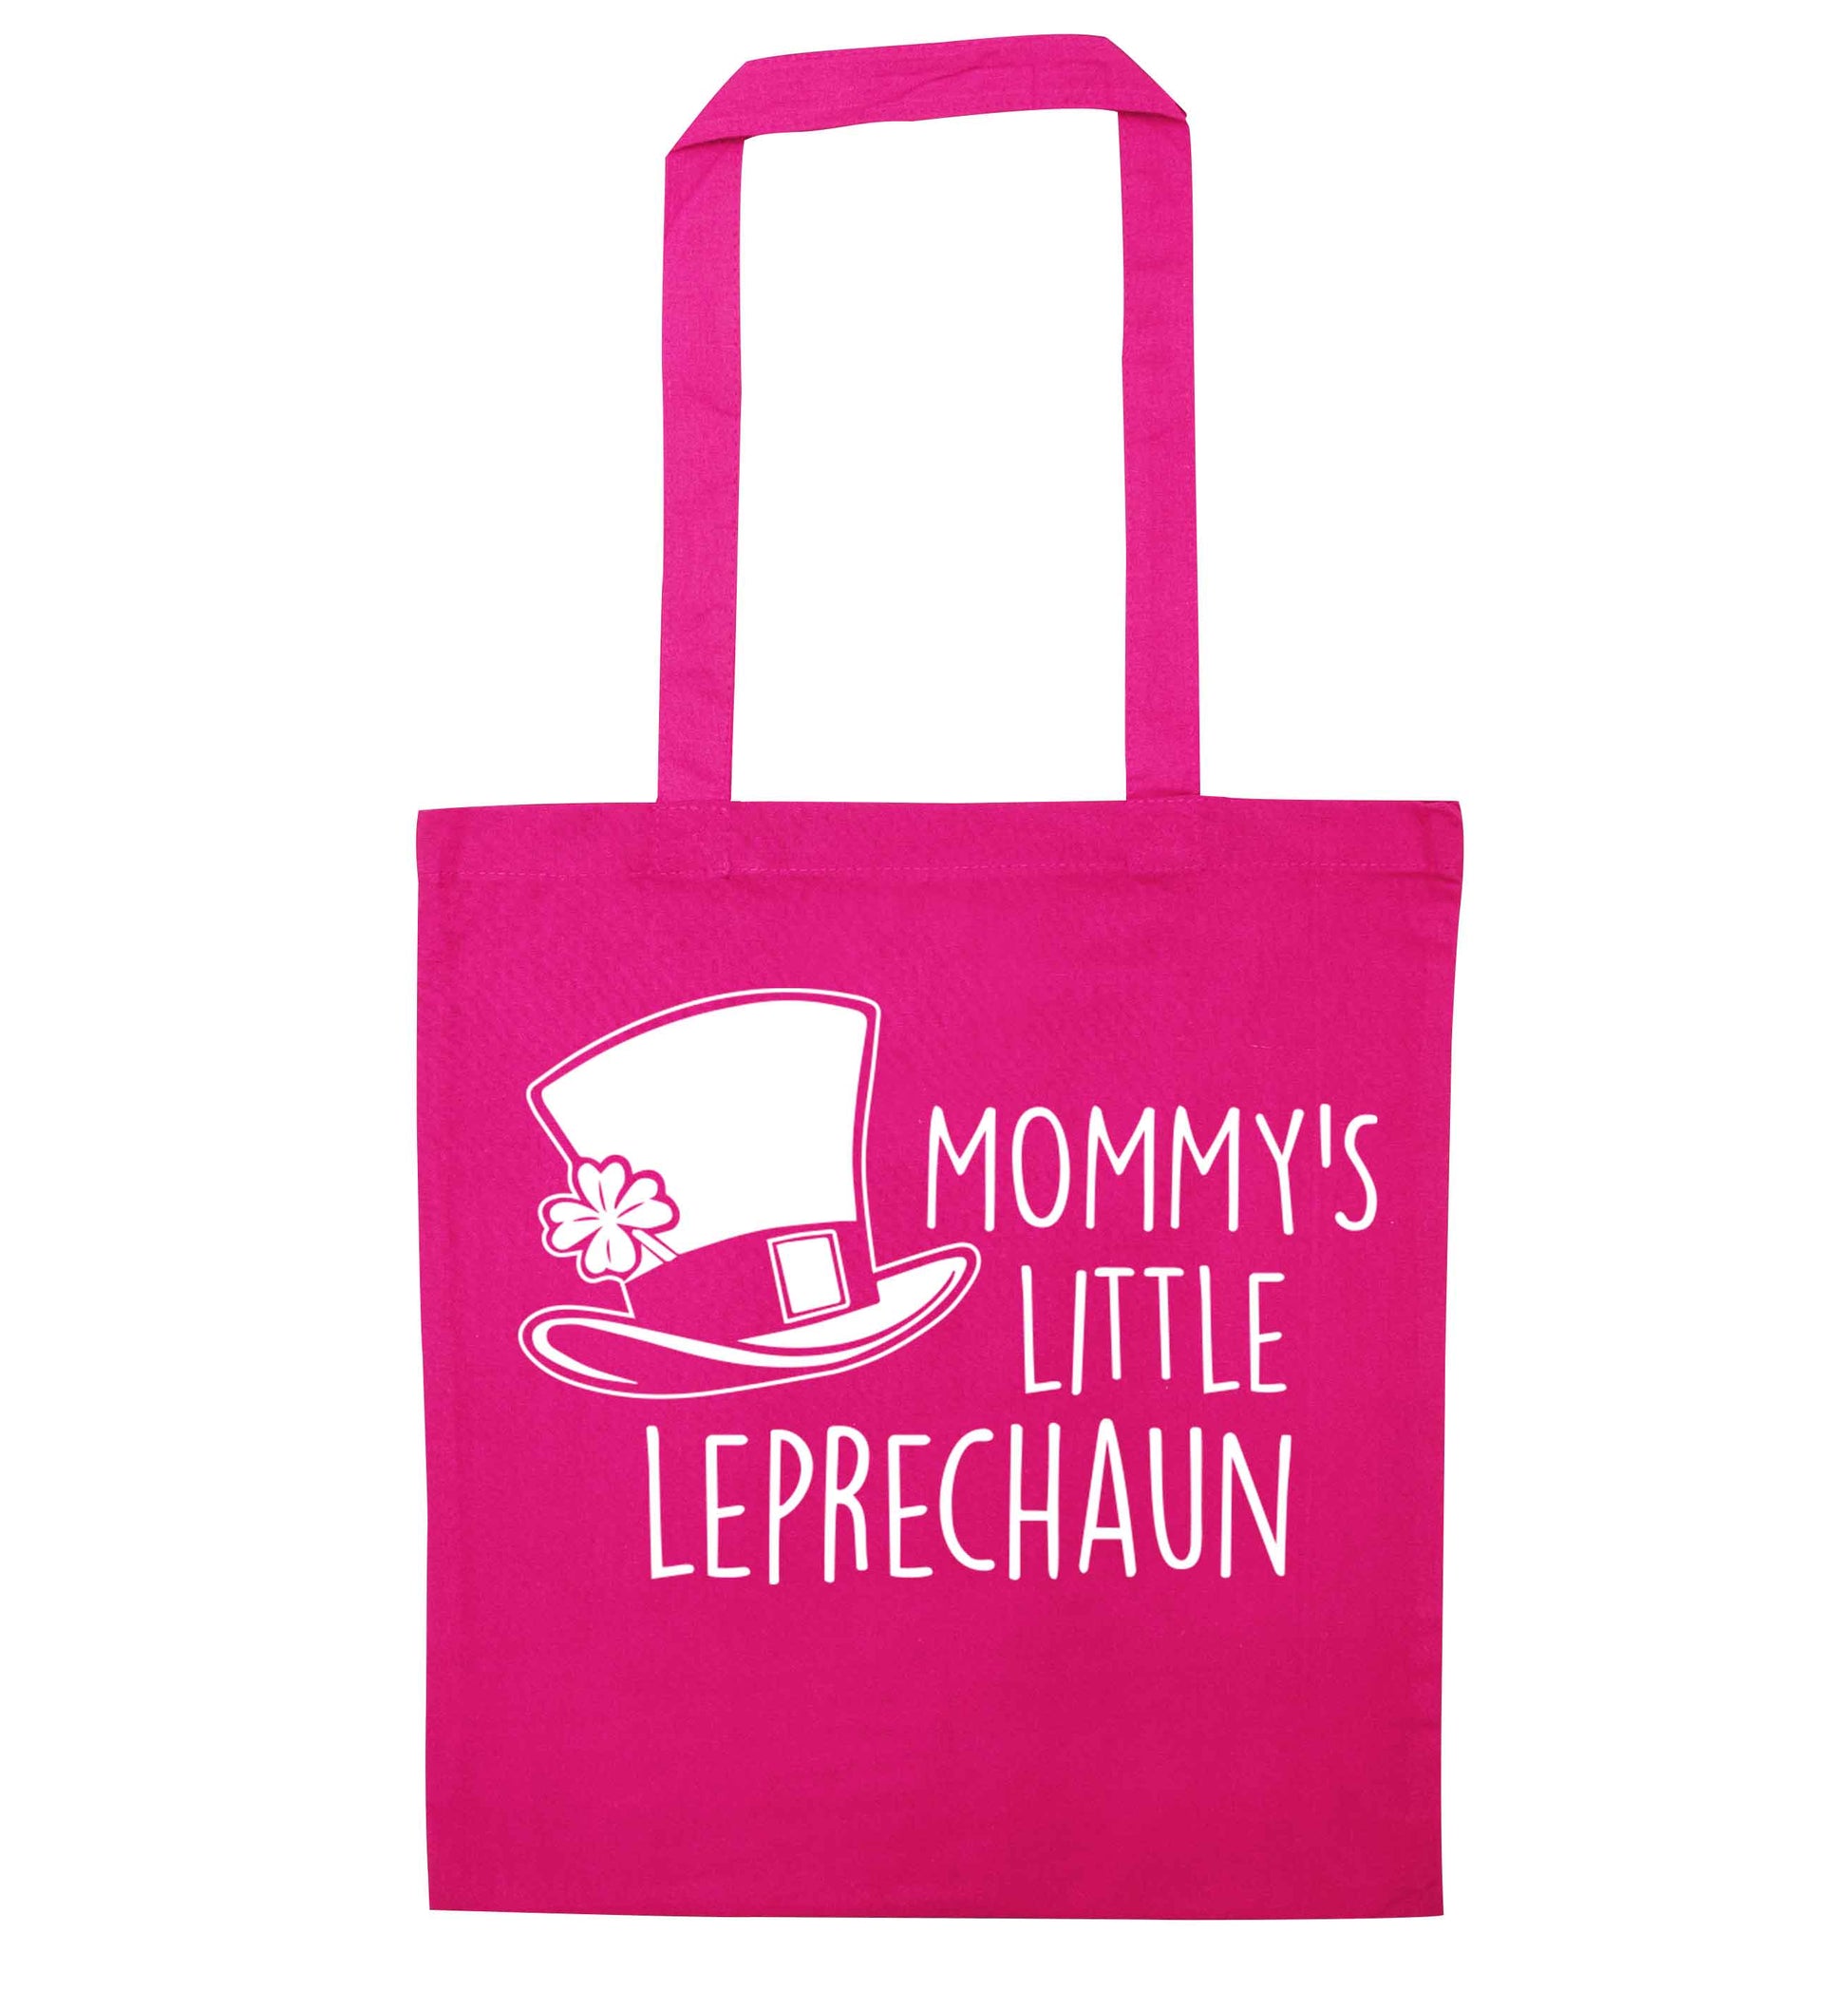 Mommy's little leprechaun pink tote bag